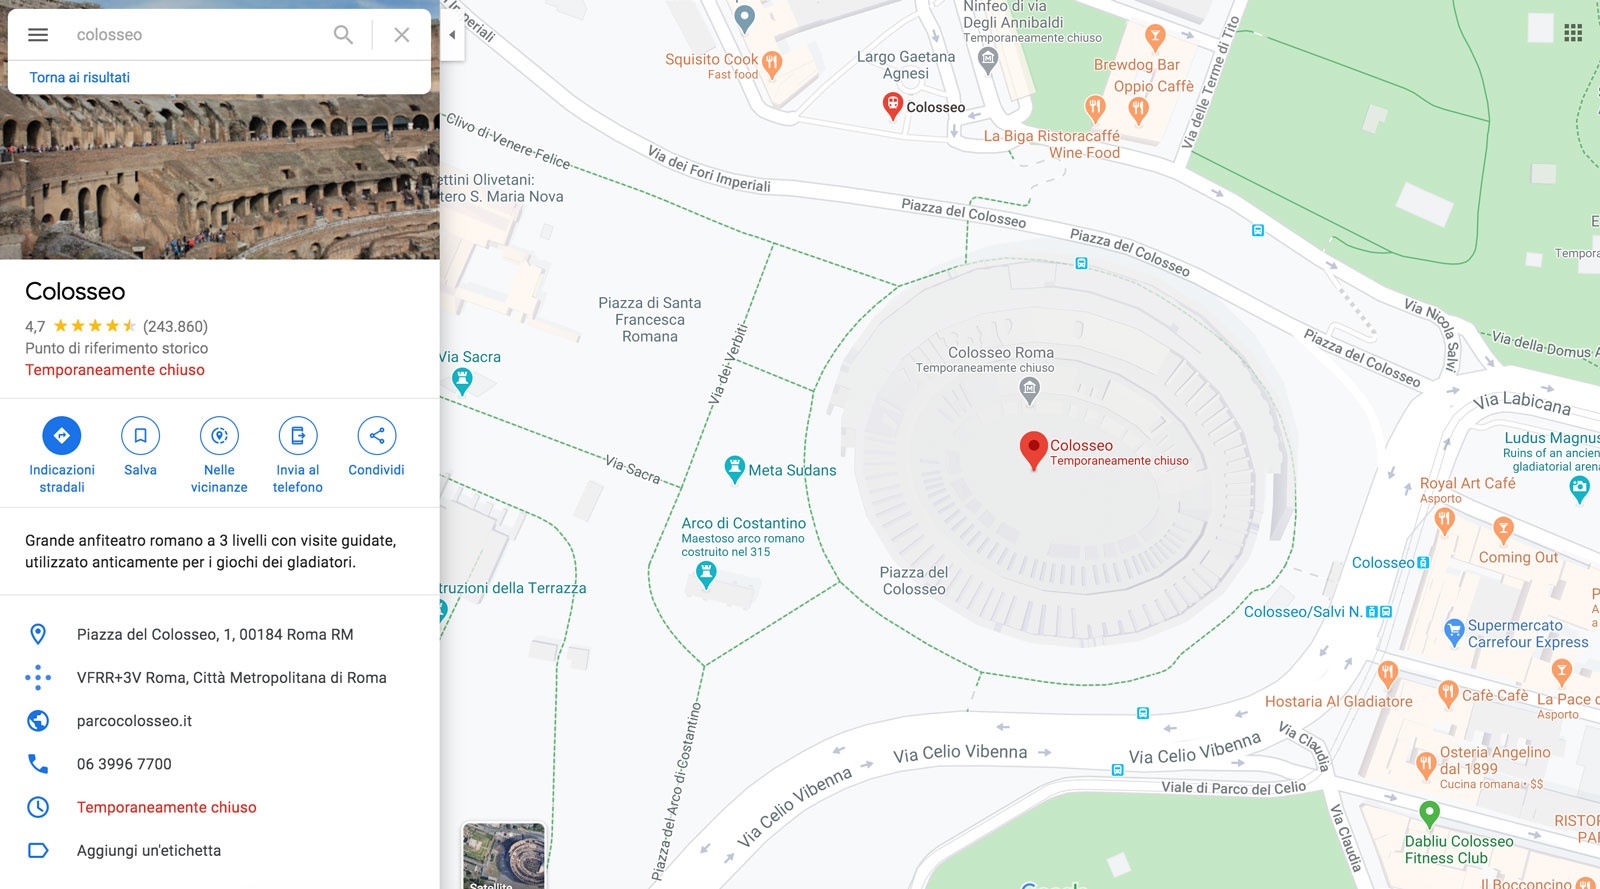 integrare mappe google su wordpress